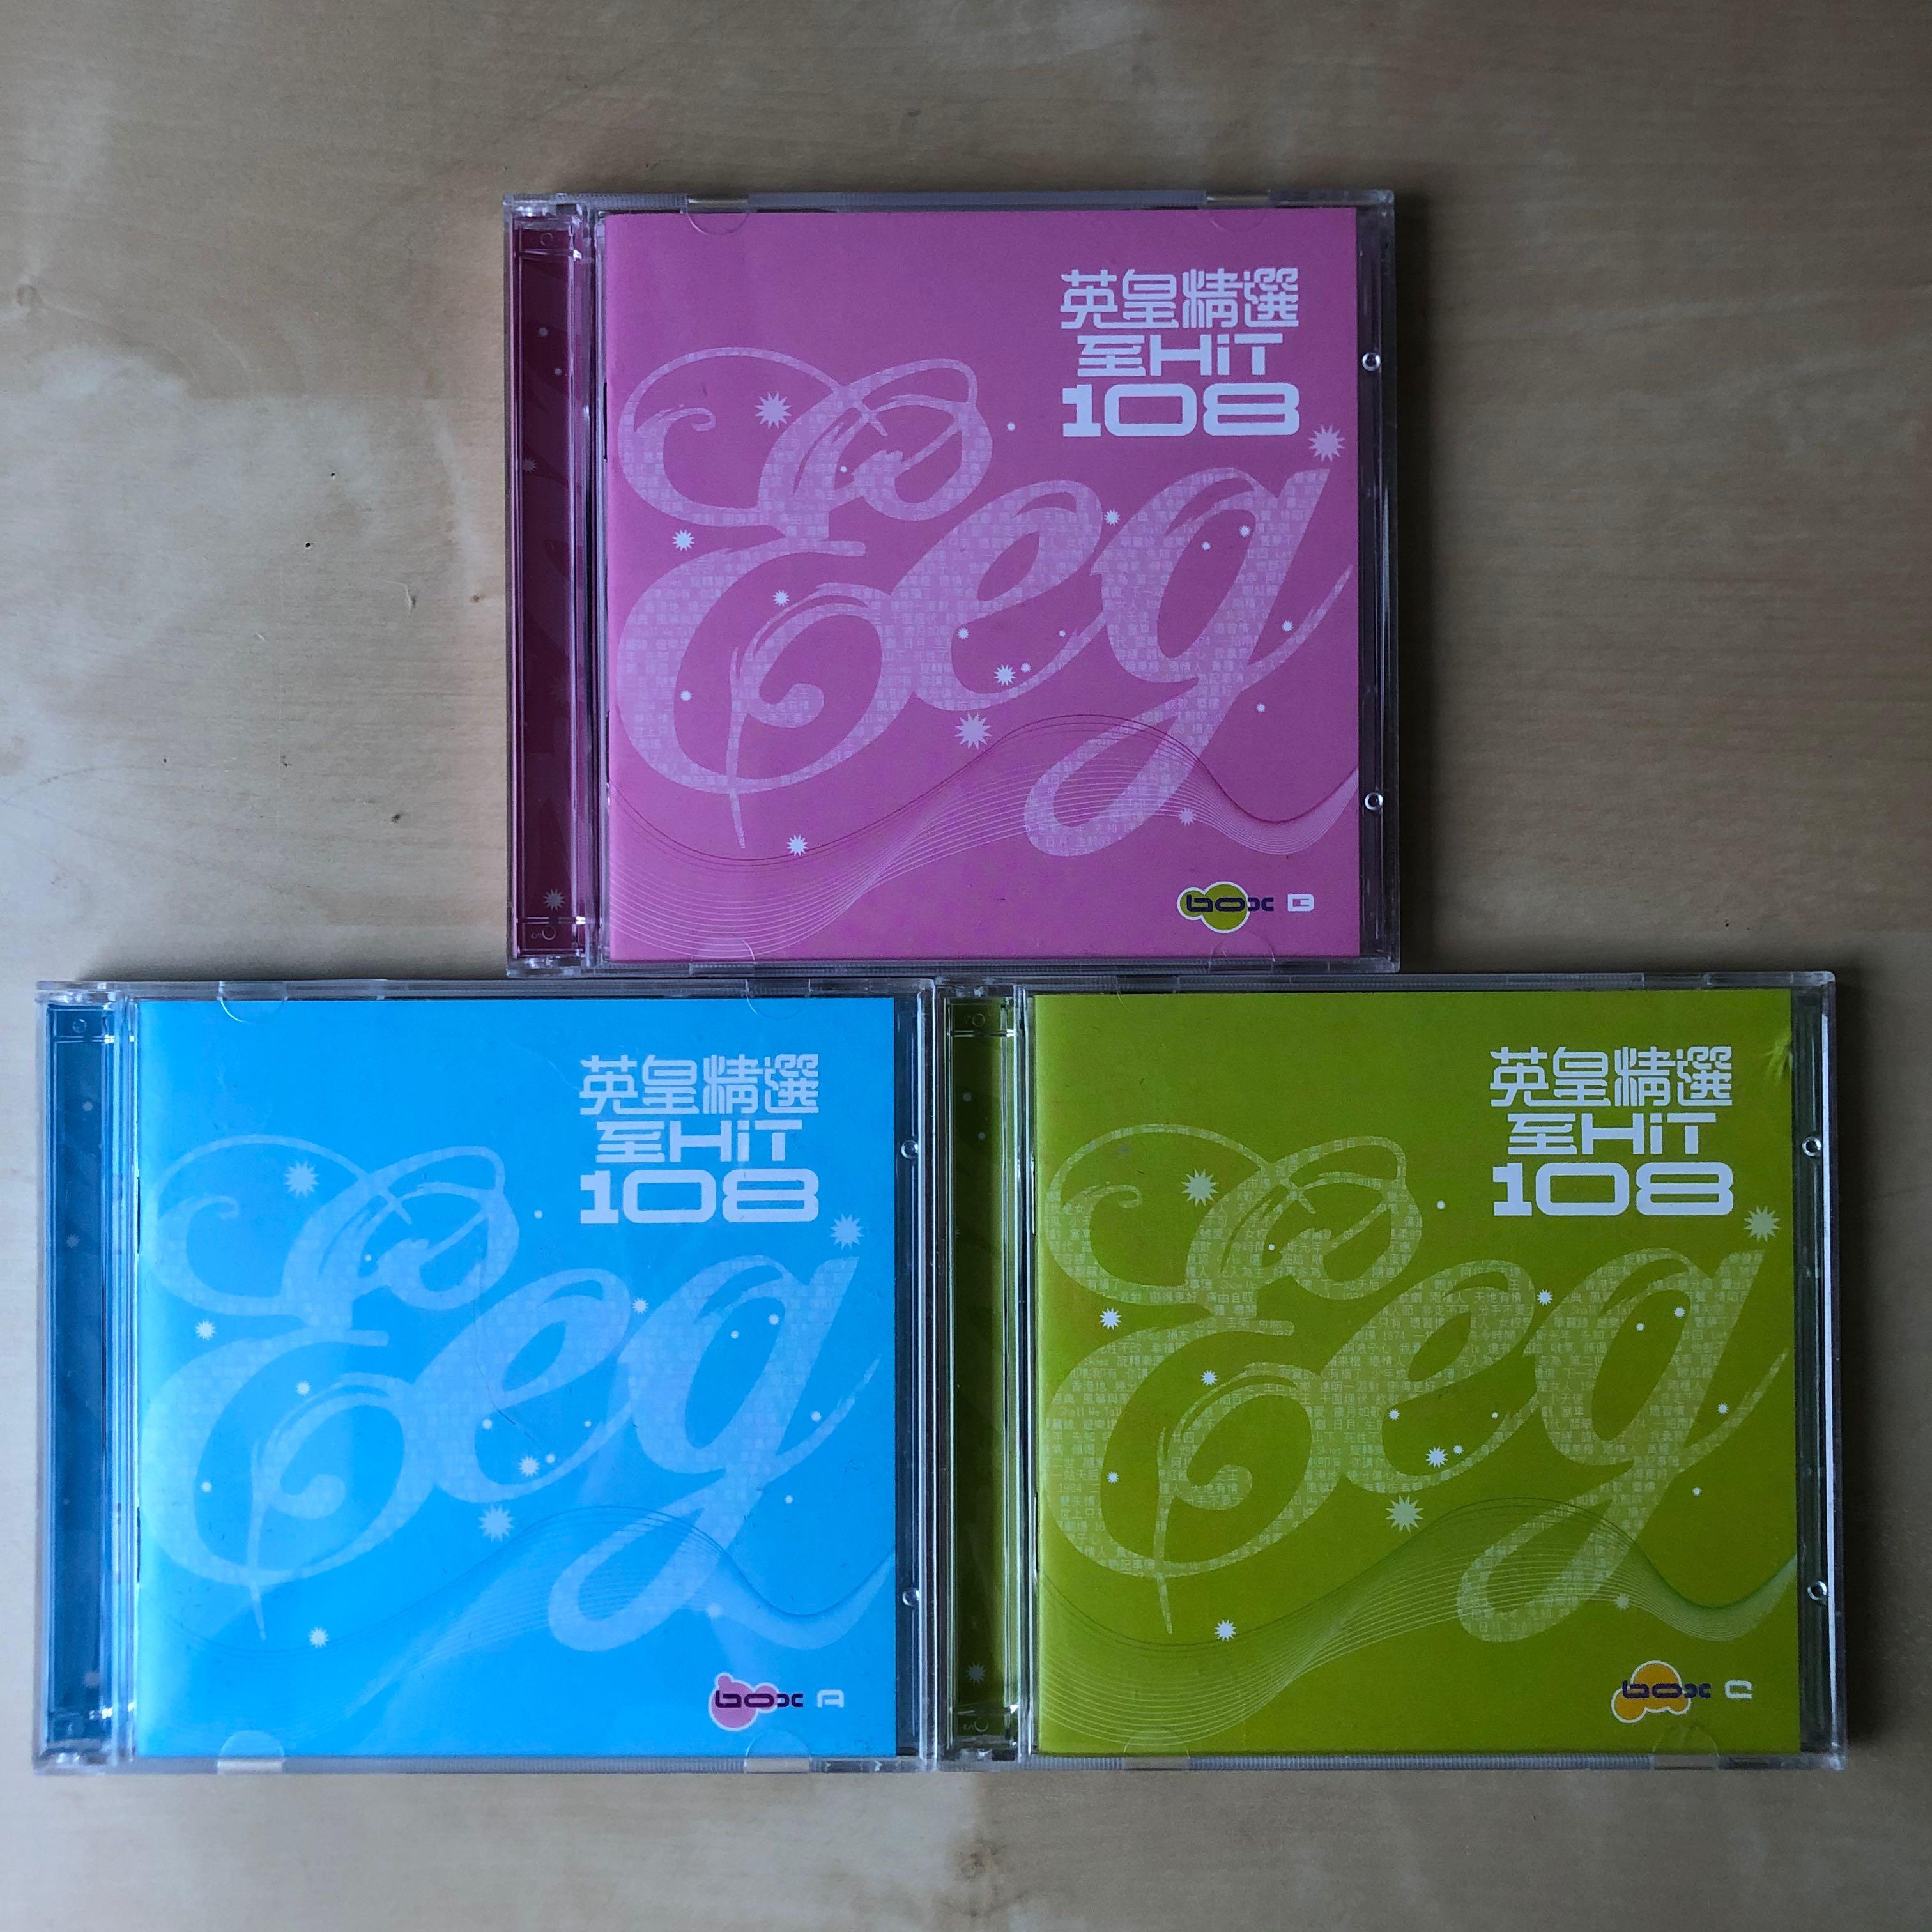 CD丨愛回憶108 / Love Memories 108 - EEG Best Selections EEG精選 